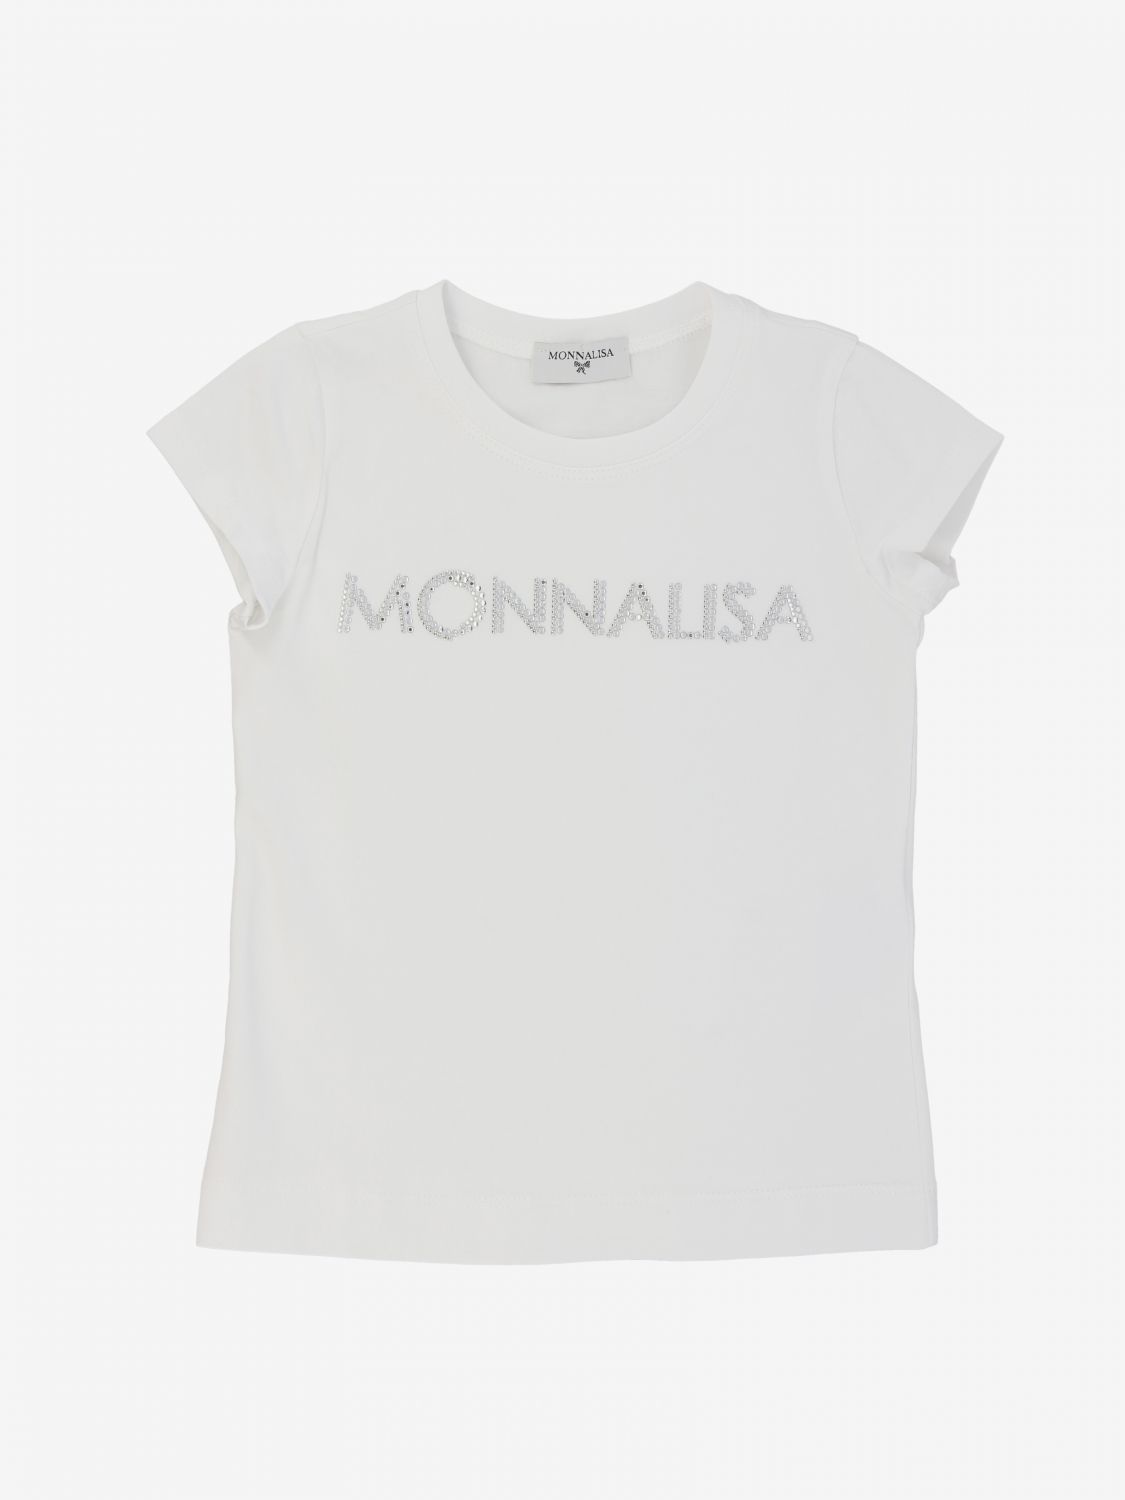 Monnalisa モナリザ チュニックＴシャツ+spbgp44.ru